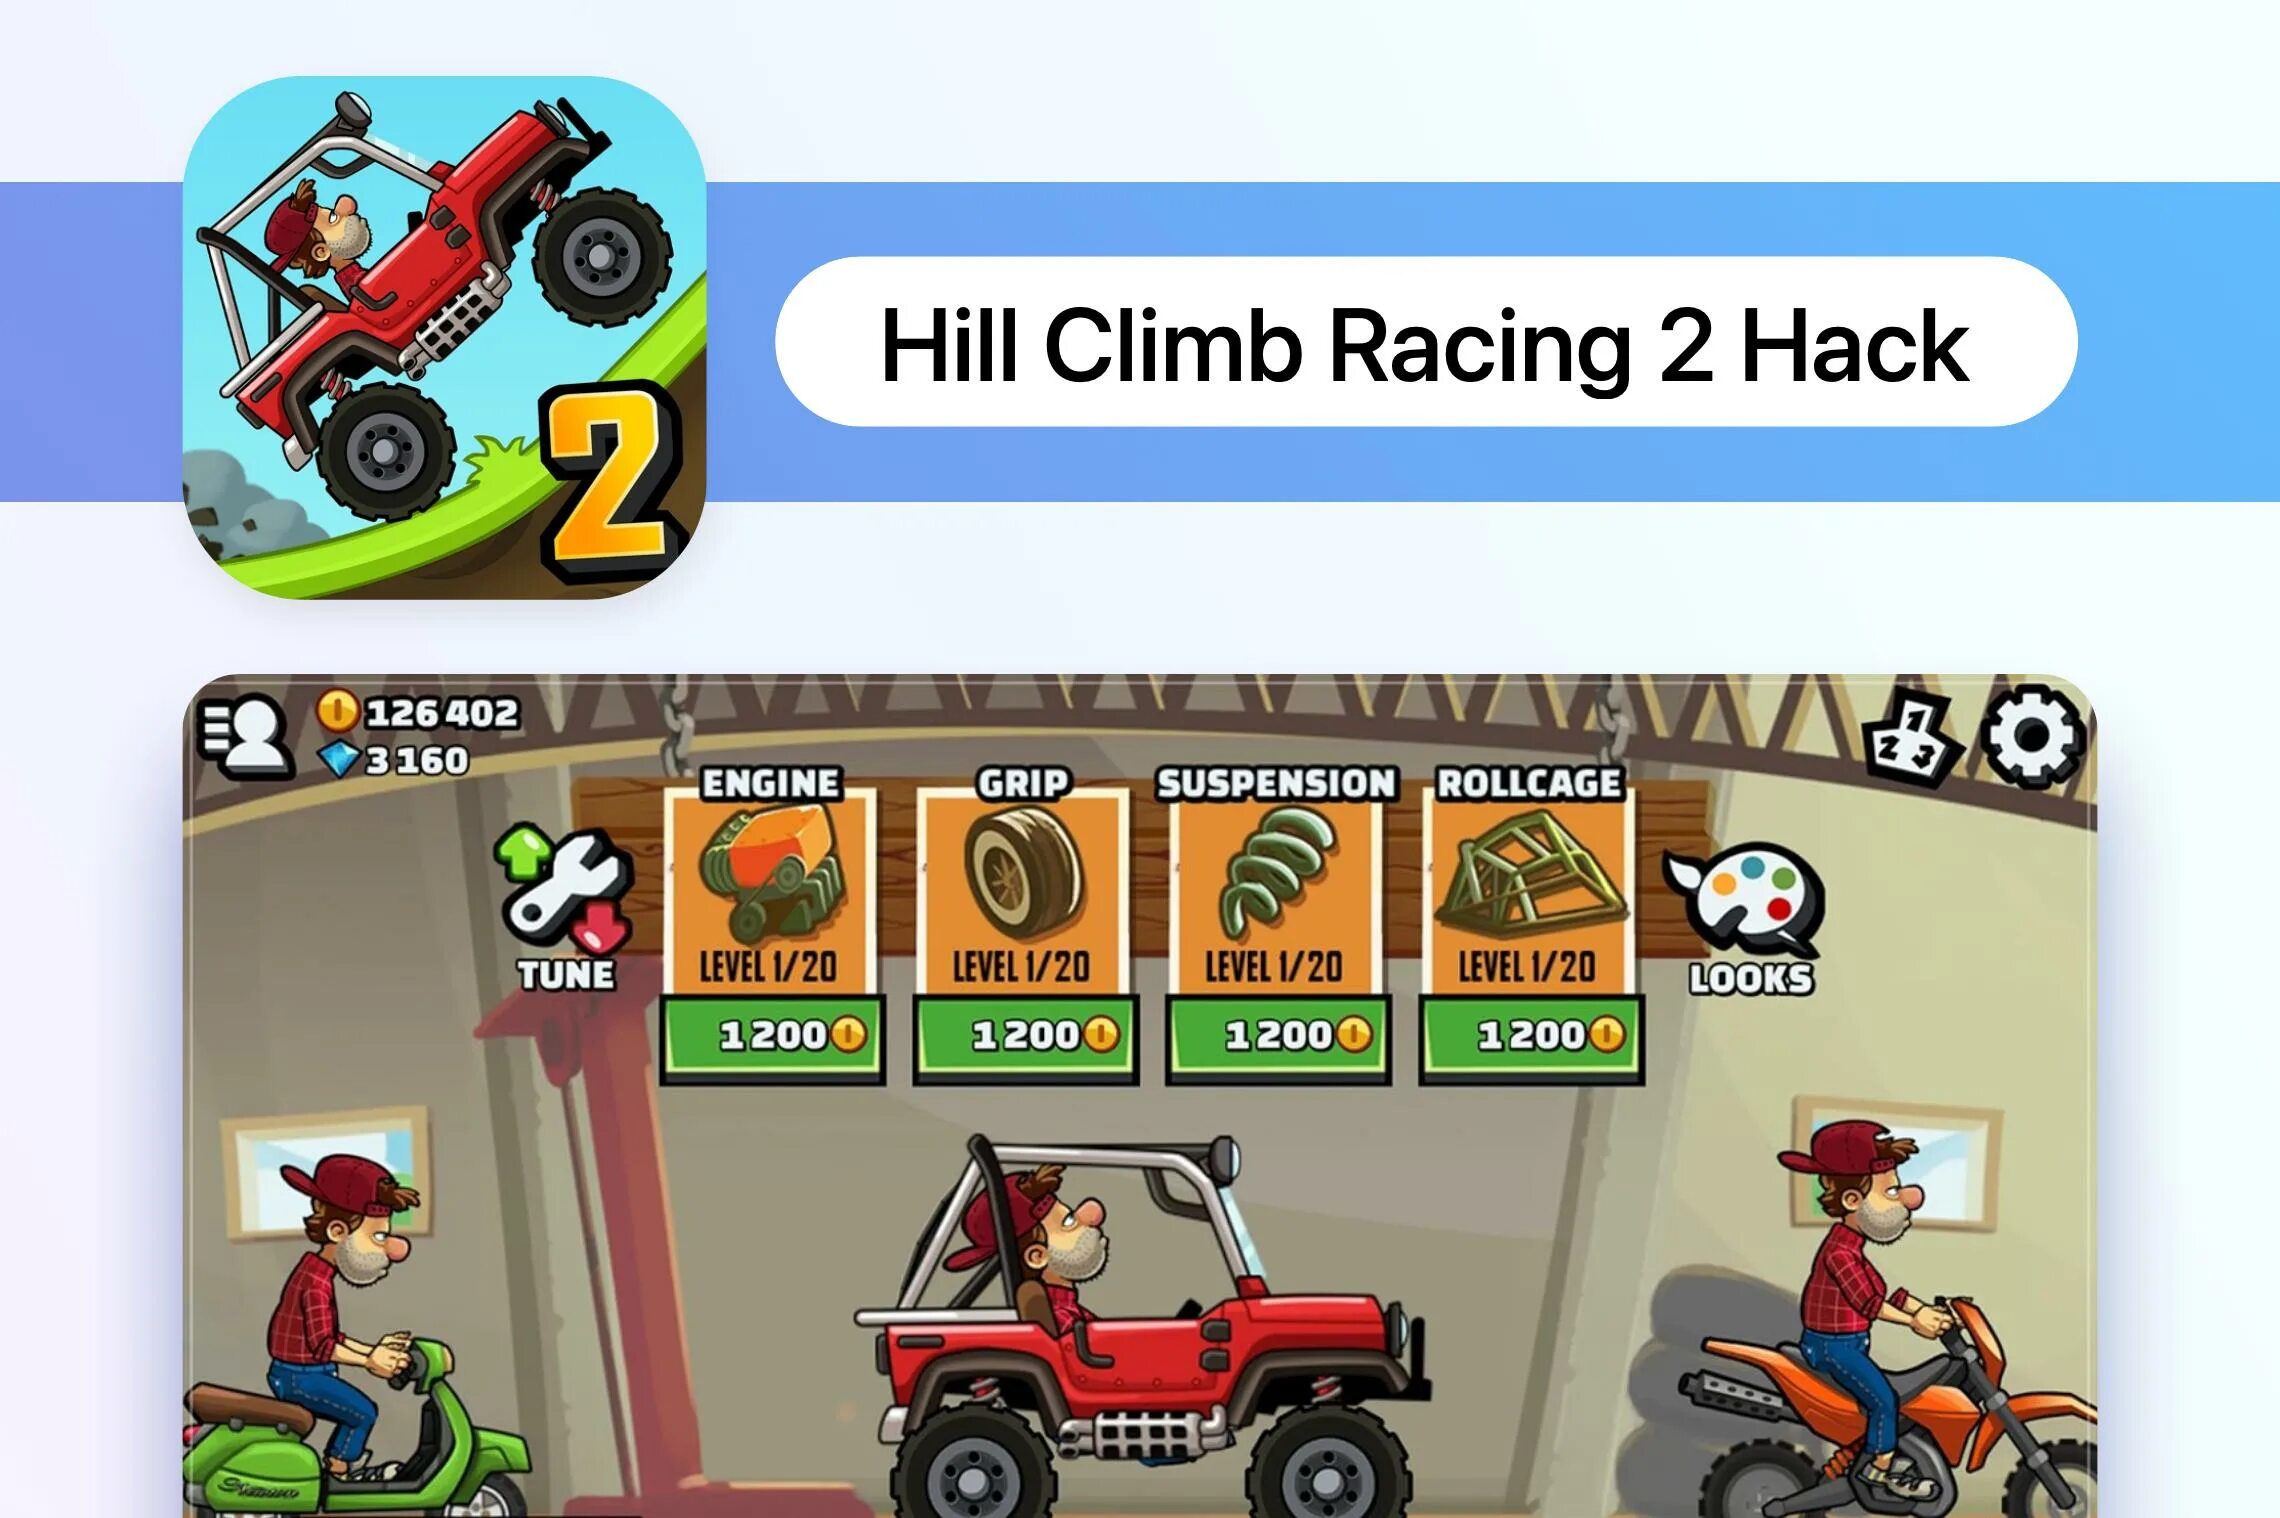 Хилл климб рейсинг бензин. Китайская версия Hill Climb Racing 2. Хилл климб рейсинг 1. Хилл климб рейсинг 2 обновление. Хилл климб рейсинг 2 китайская версия.